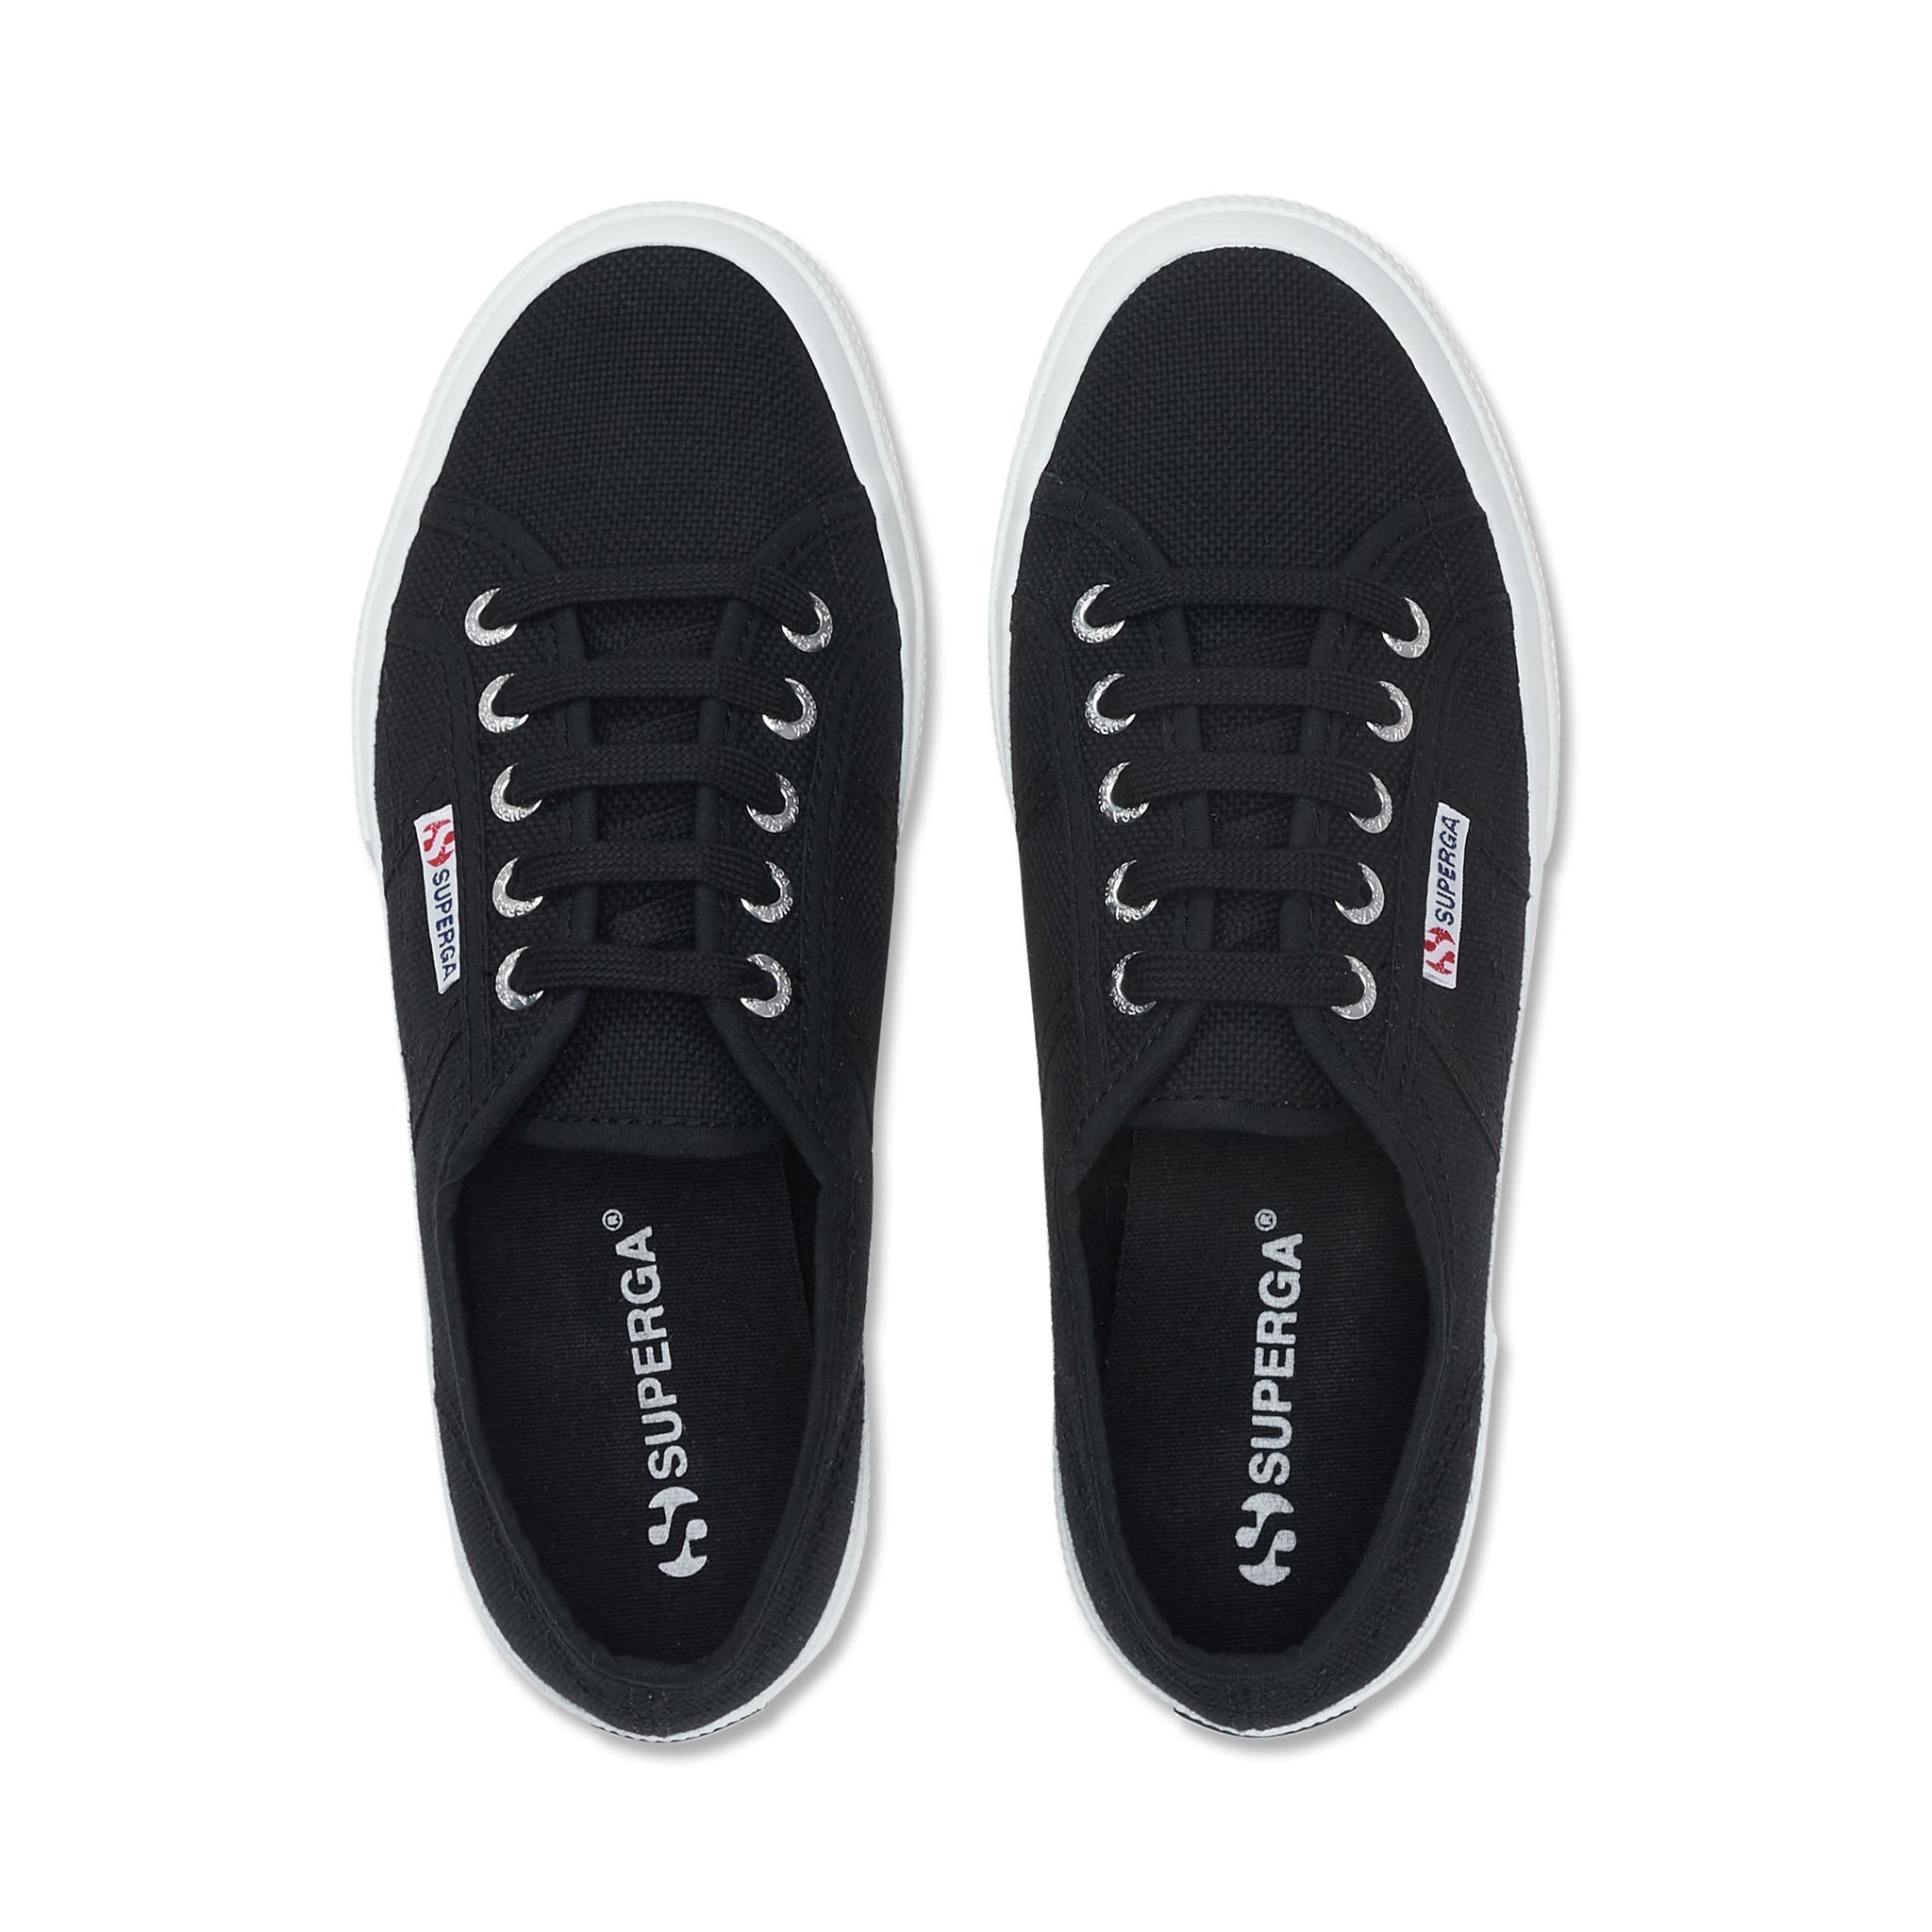 Superga 2790 4cm flatform sneakers in black on white | ASOS